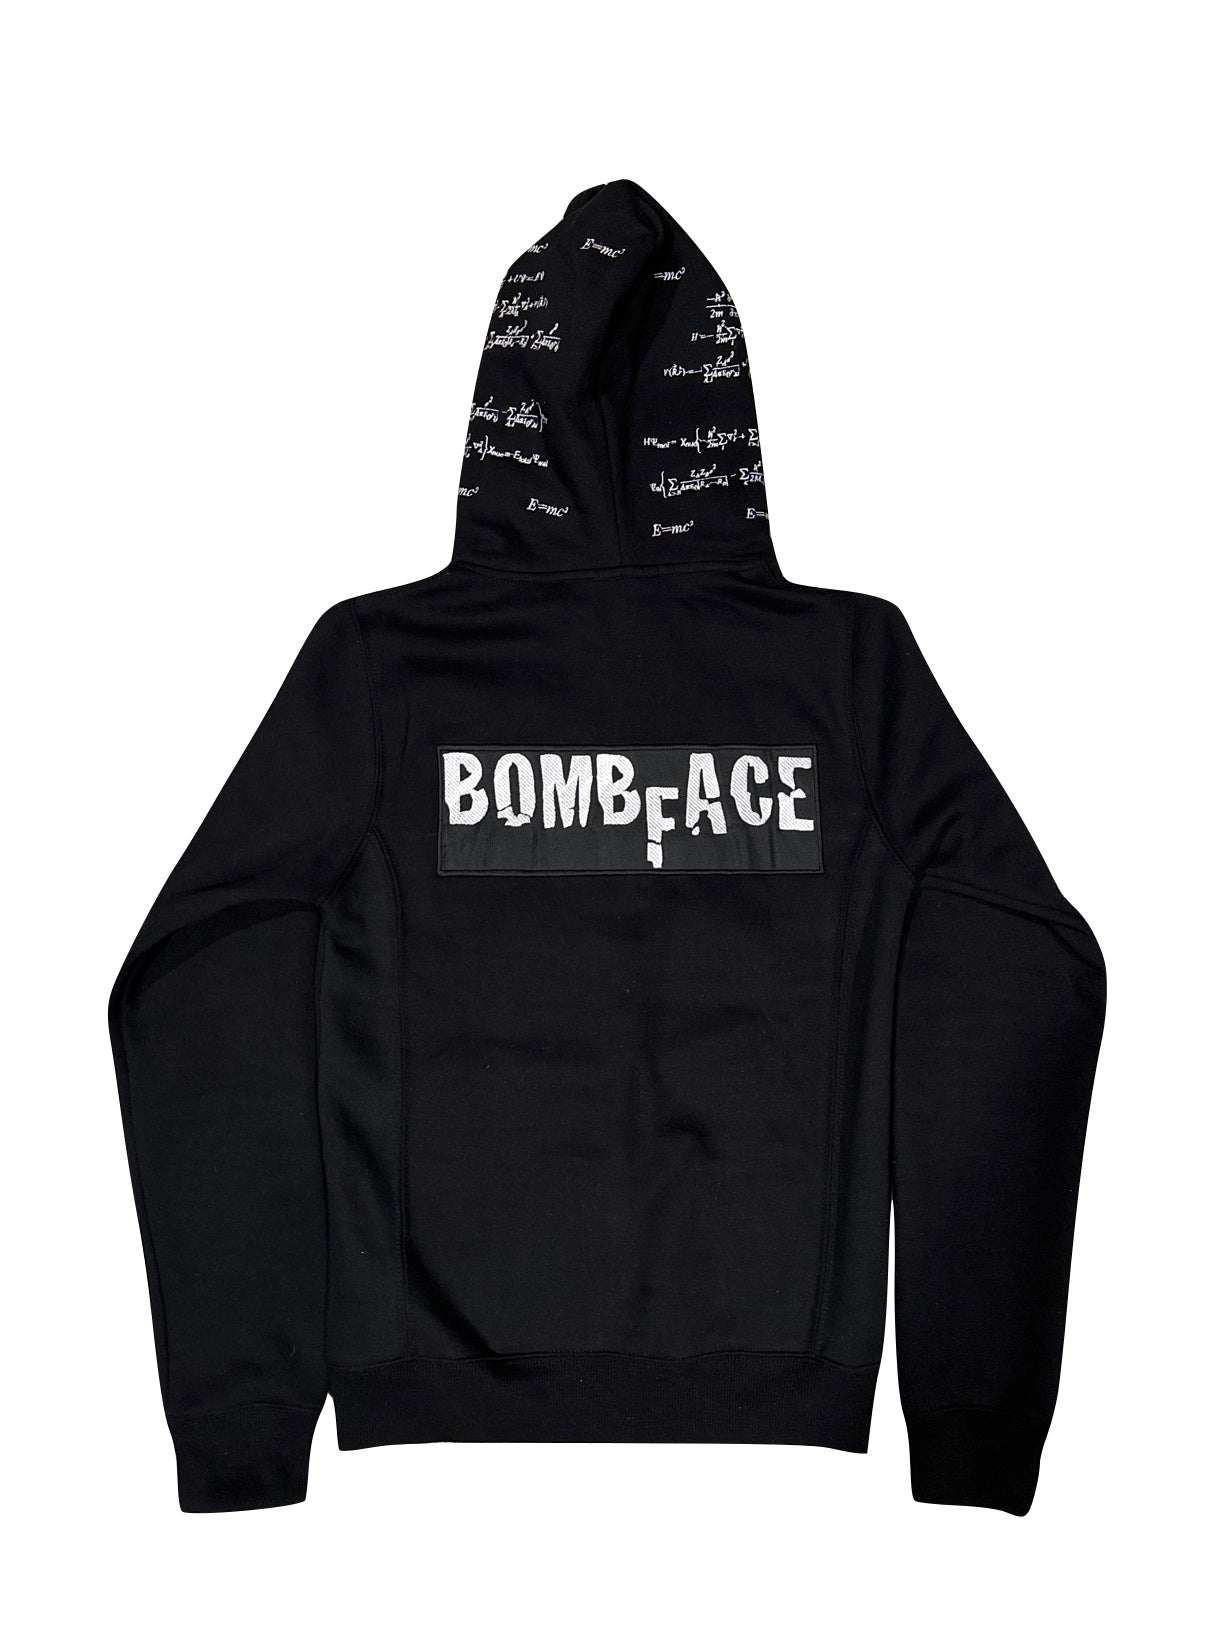 The Formula custom hoodie